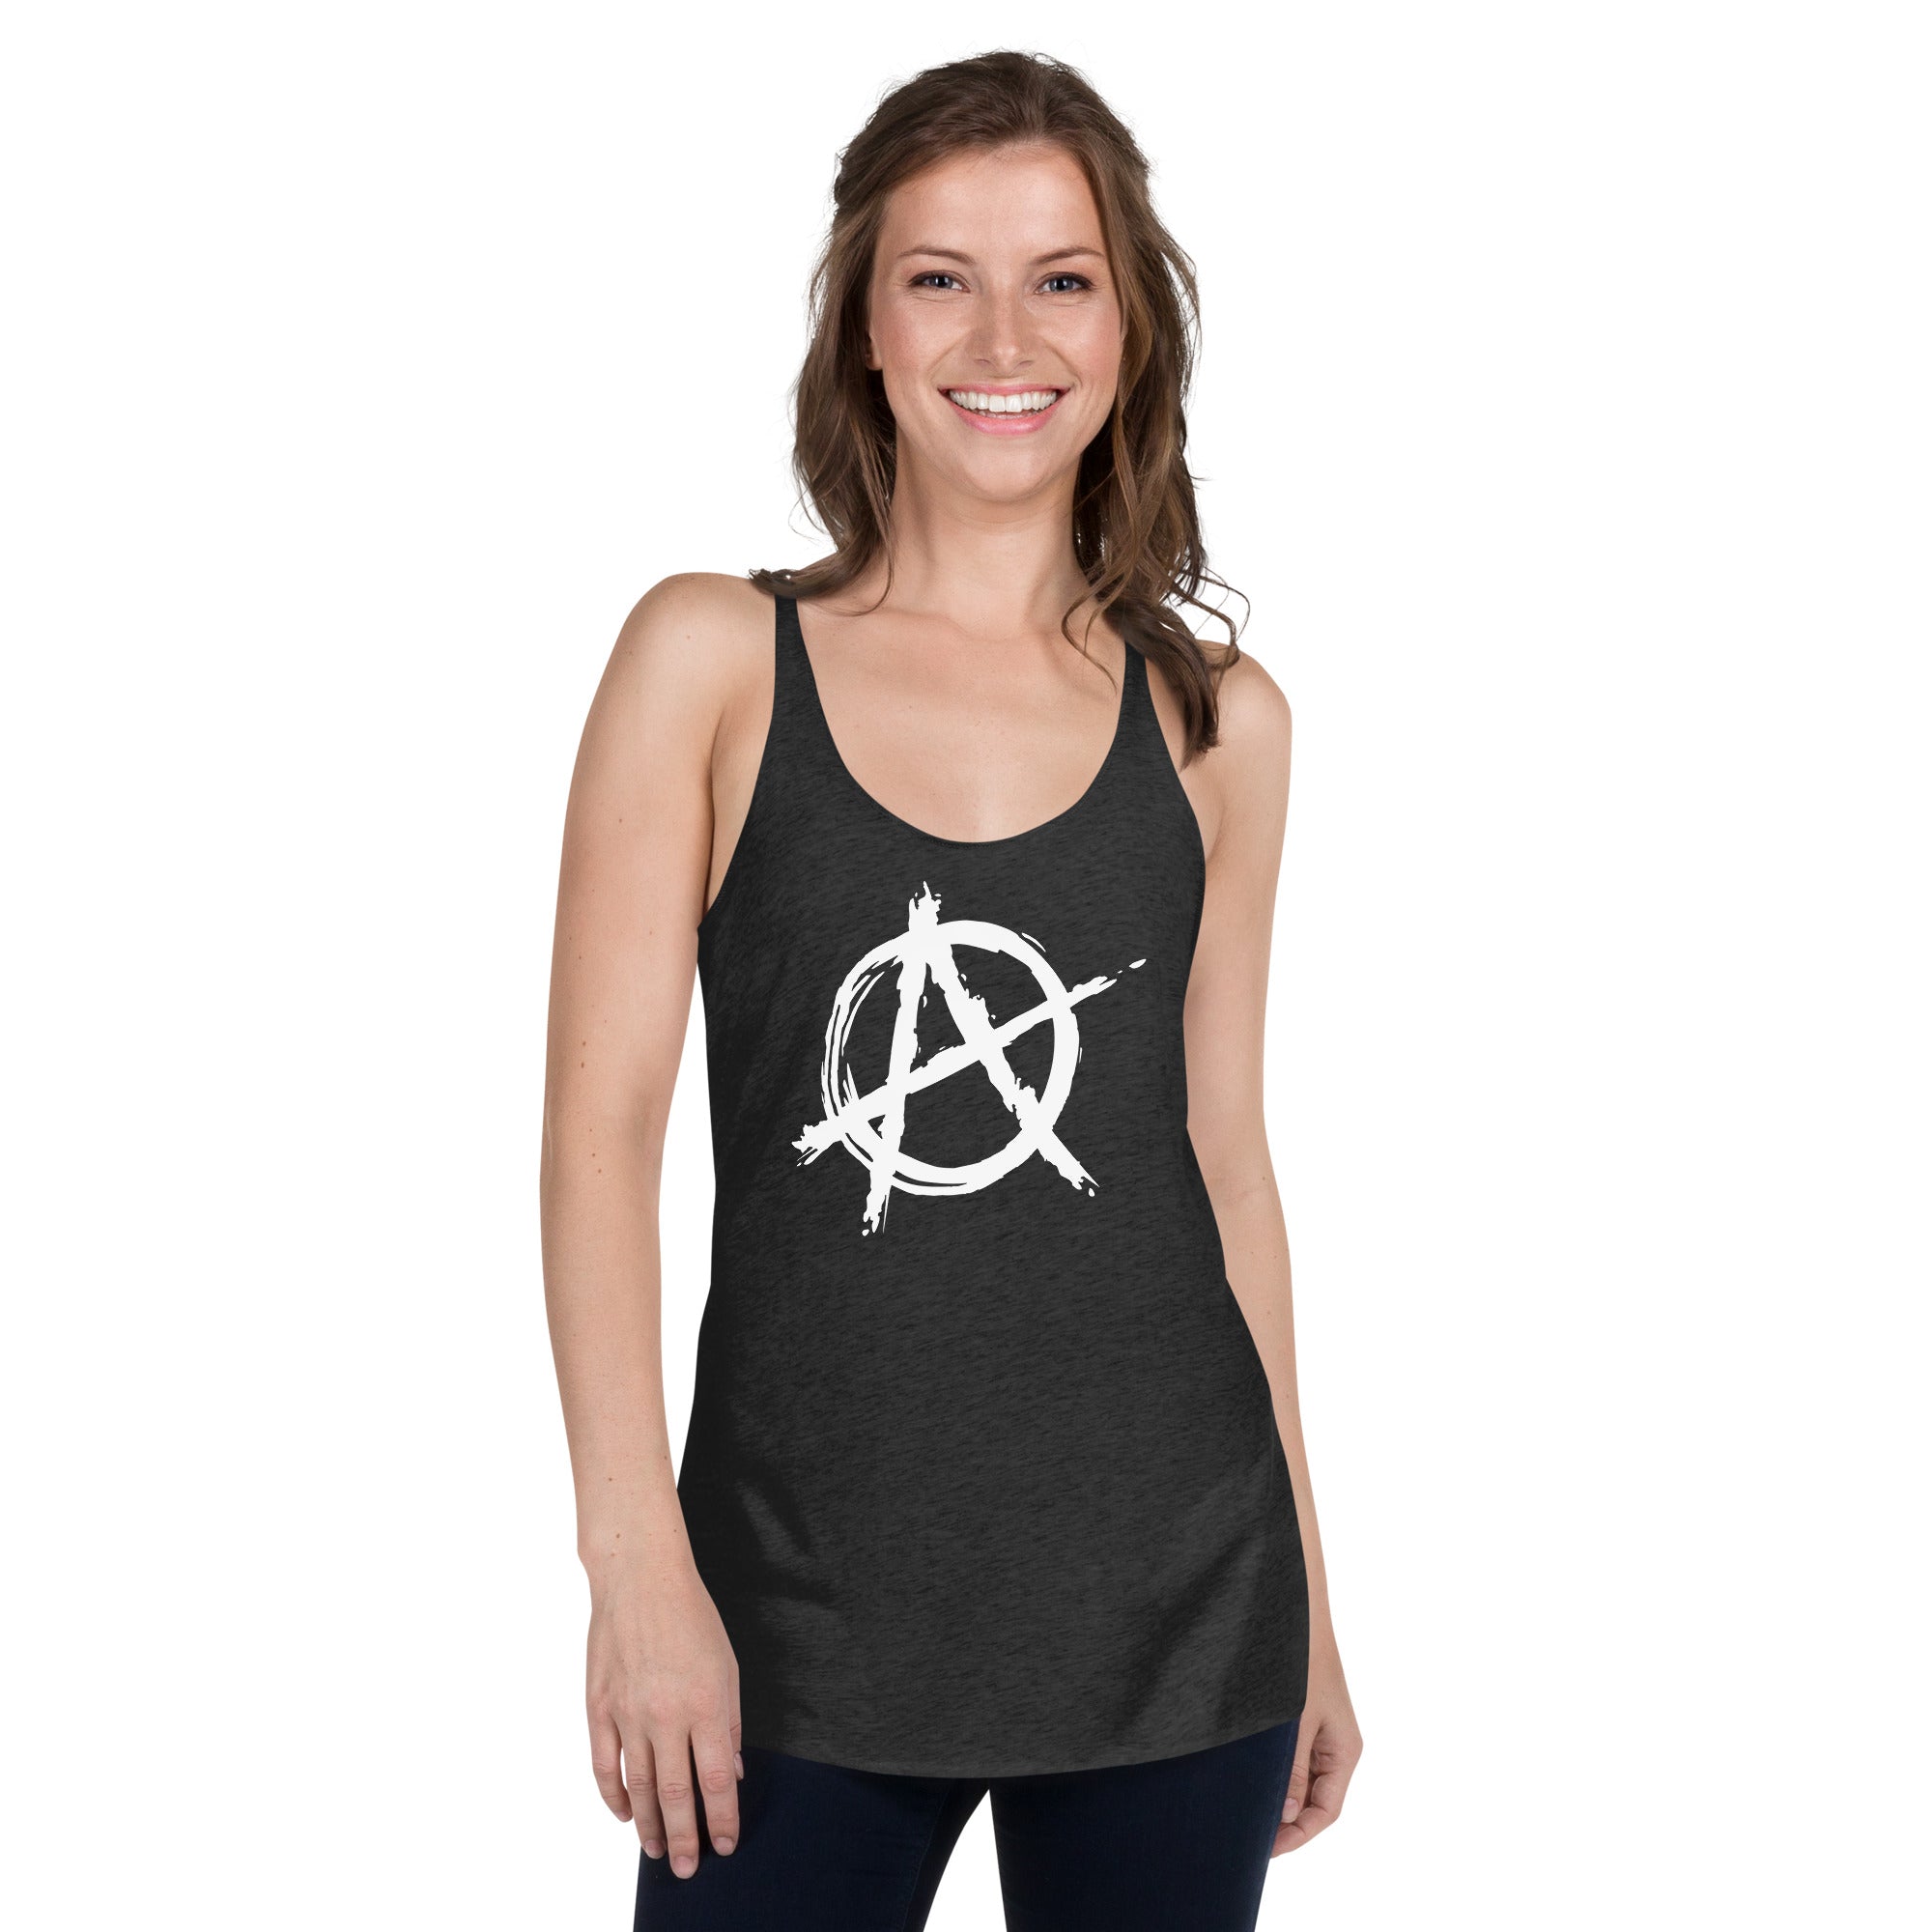 White Anarchy is Order Symbol Punk Rock Women's Racerback Tank Top Shirt